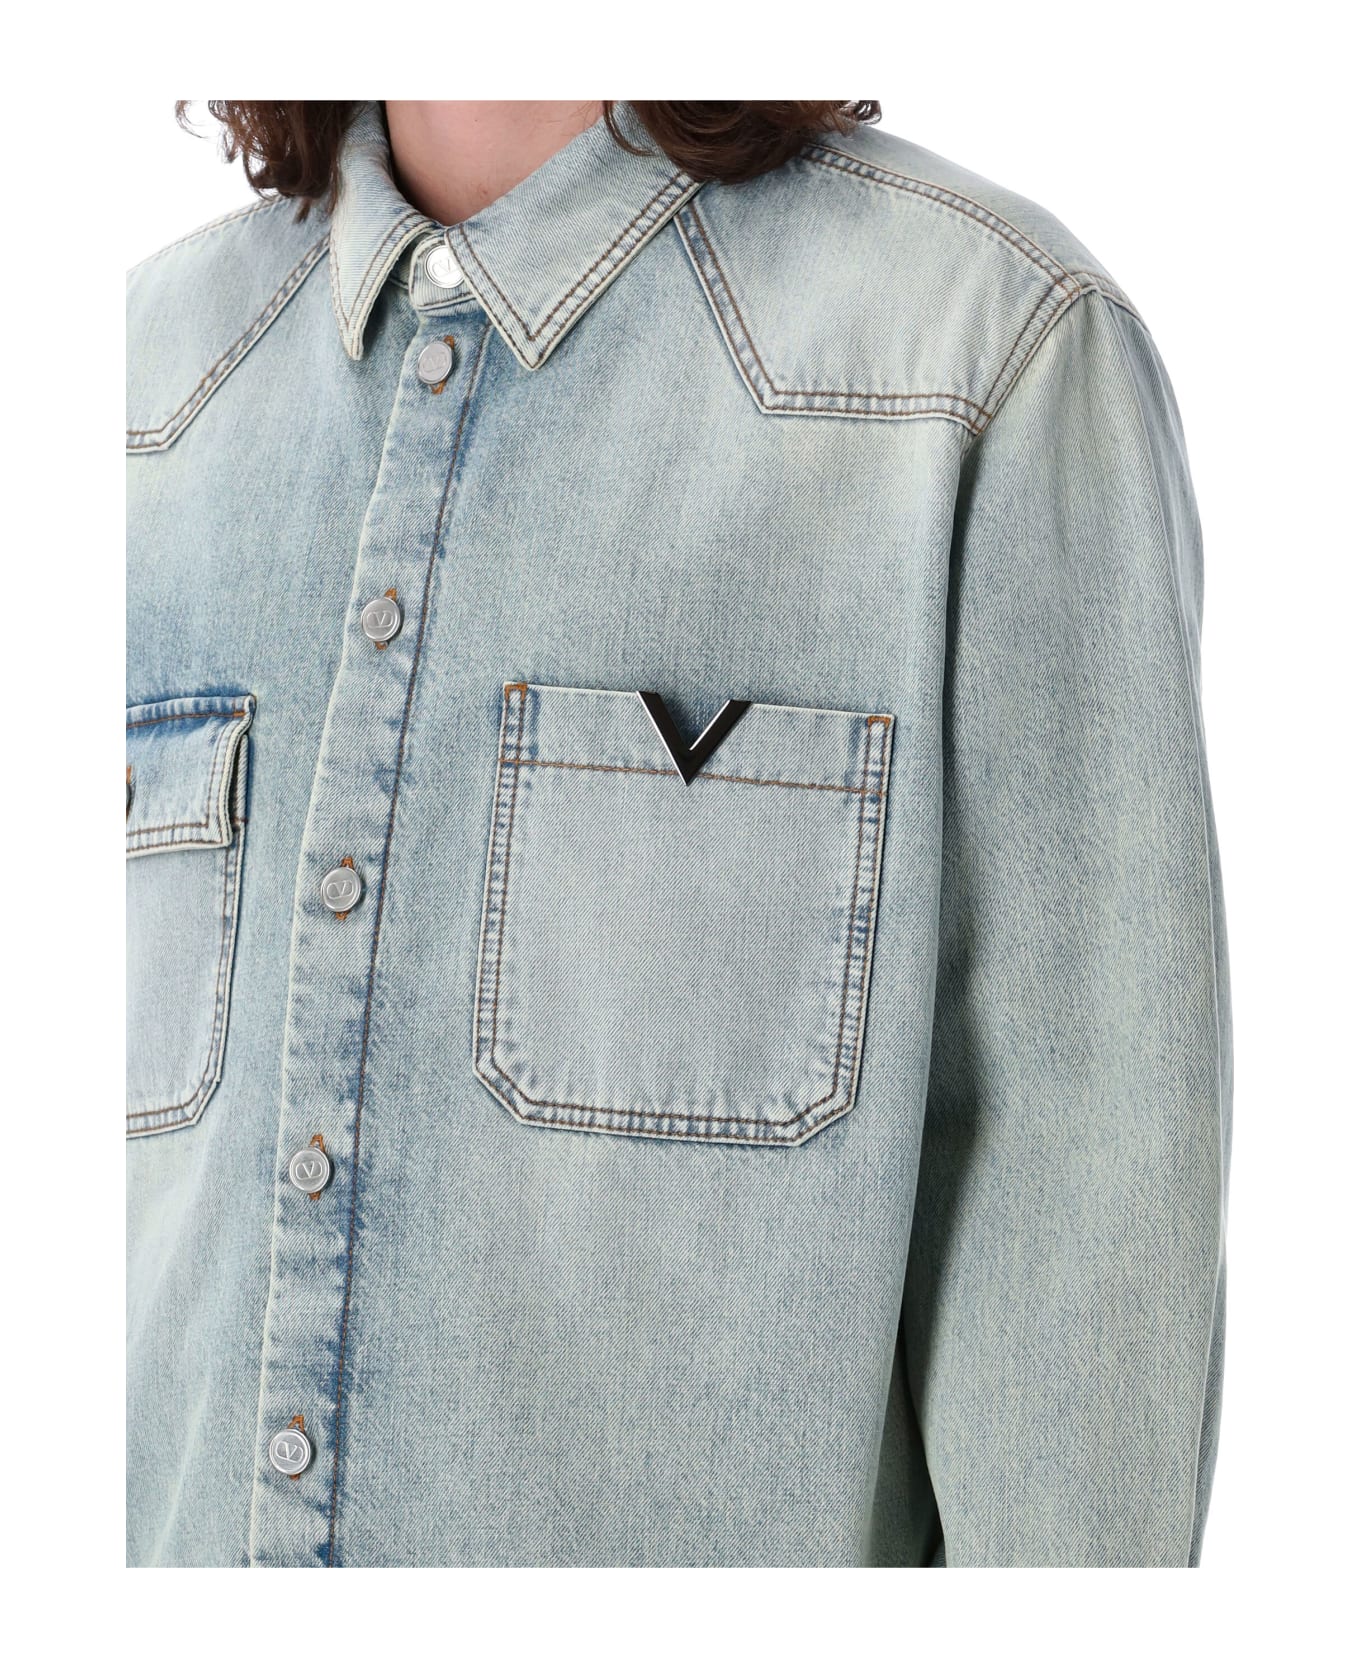 Valentino Garavani Denim Shirt Jacket - LIGH BLUE